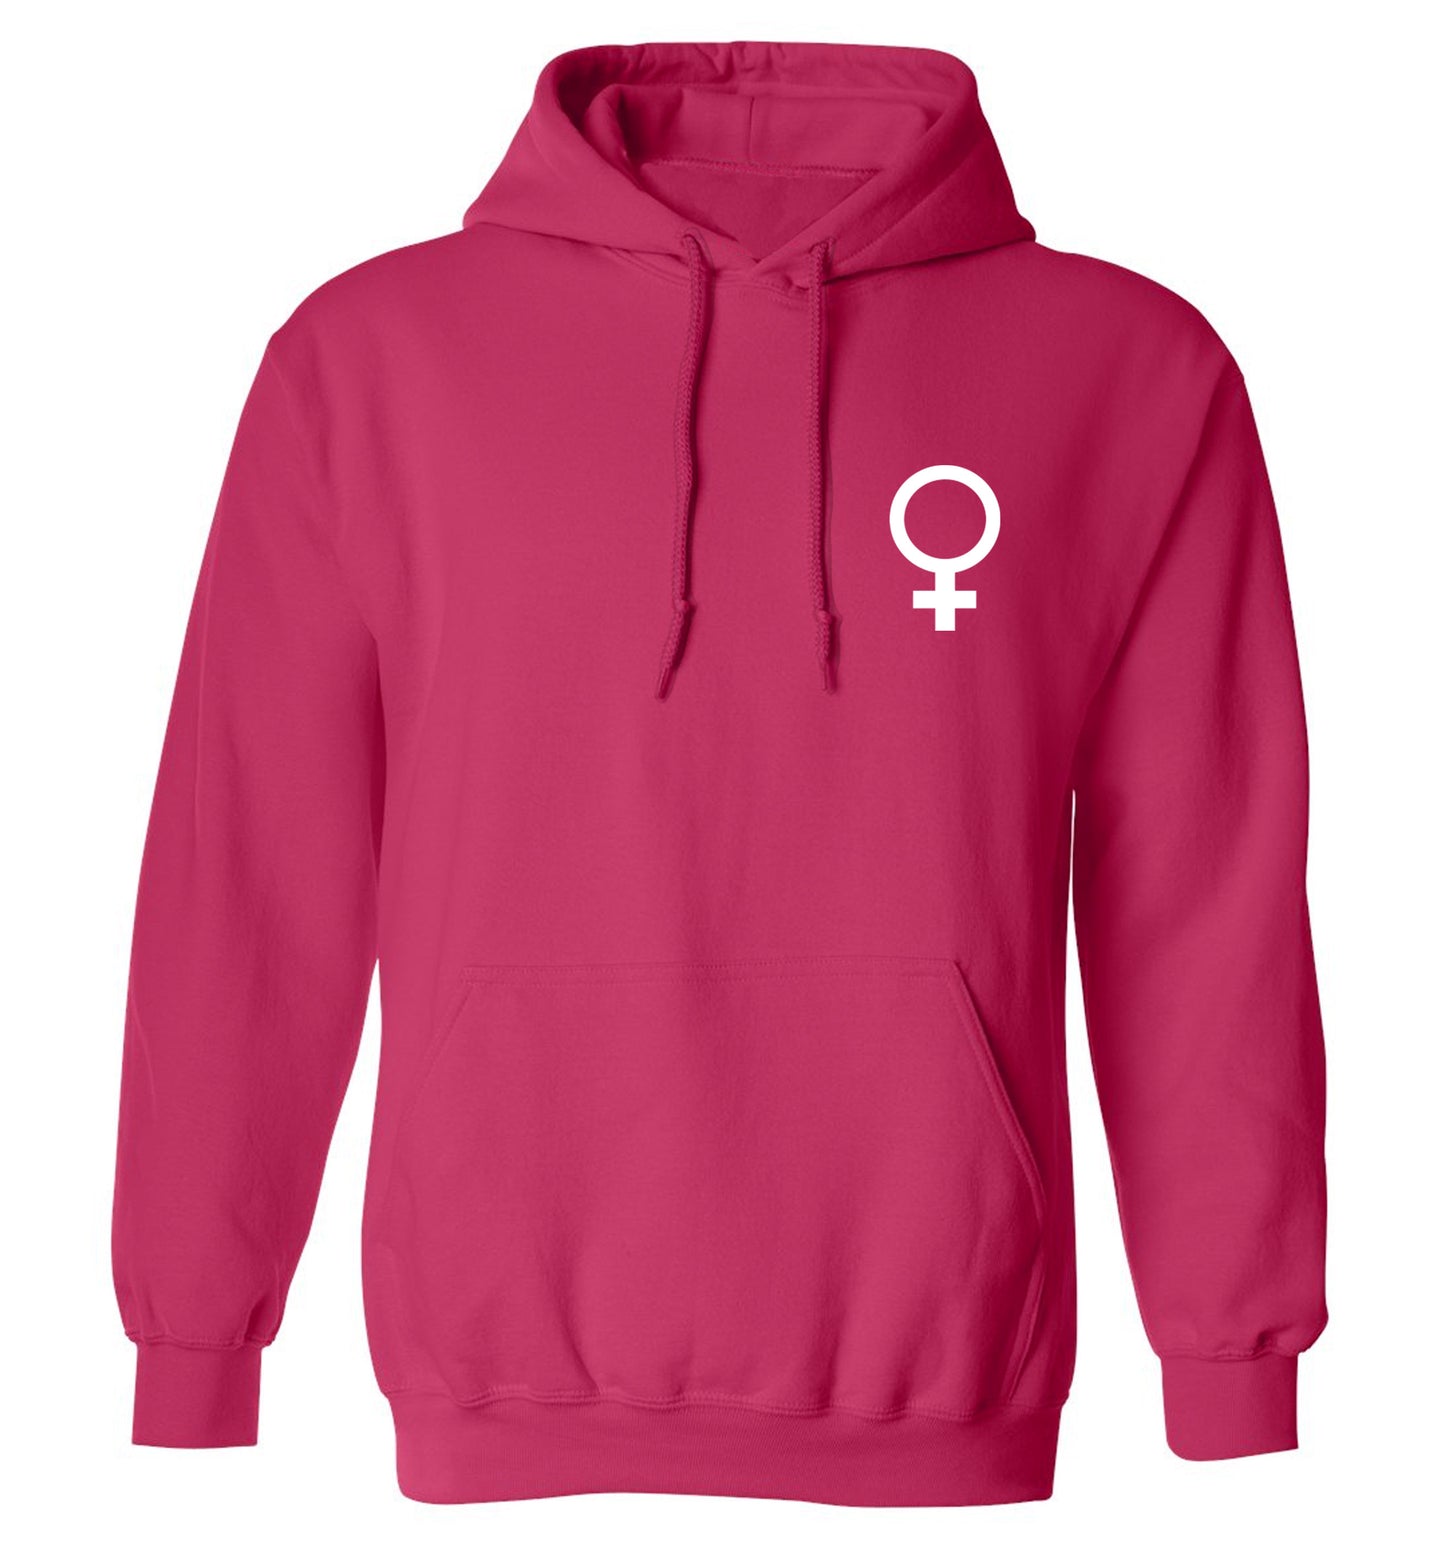 Female pocket symbol adults unisex pink hoodie 2XL